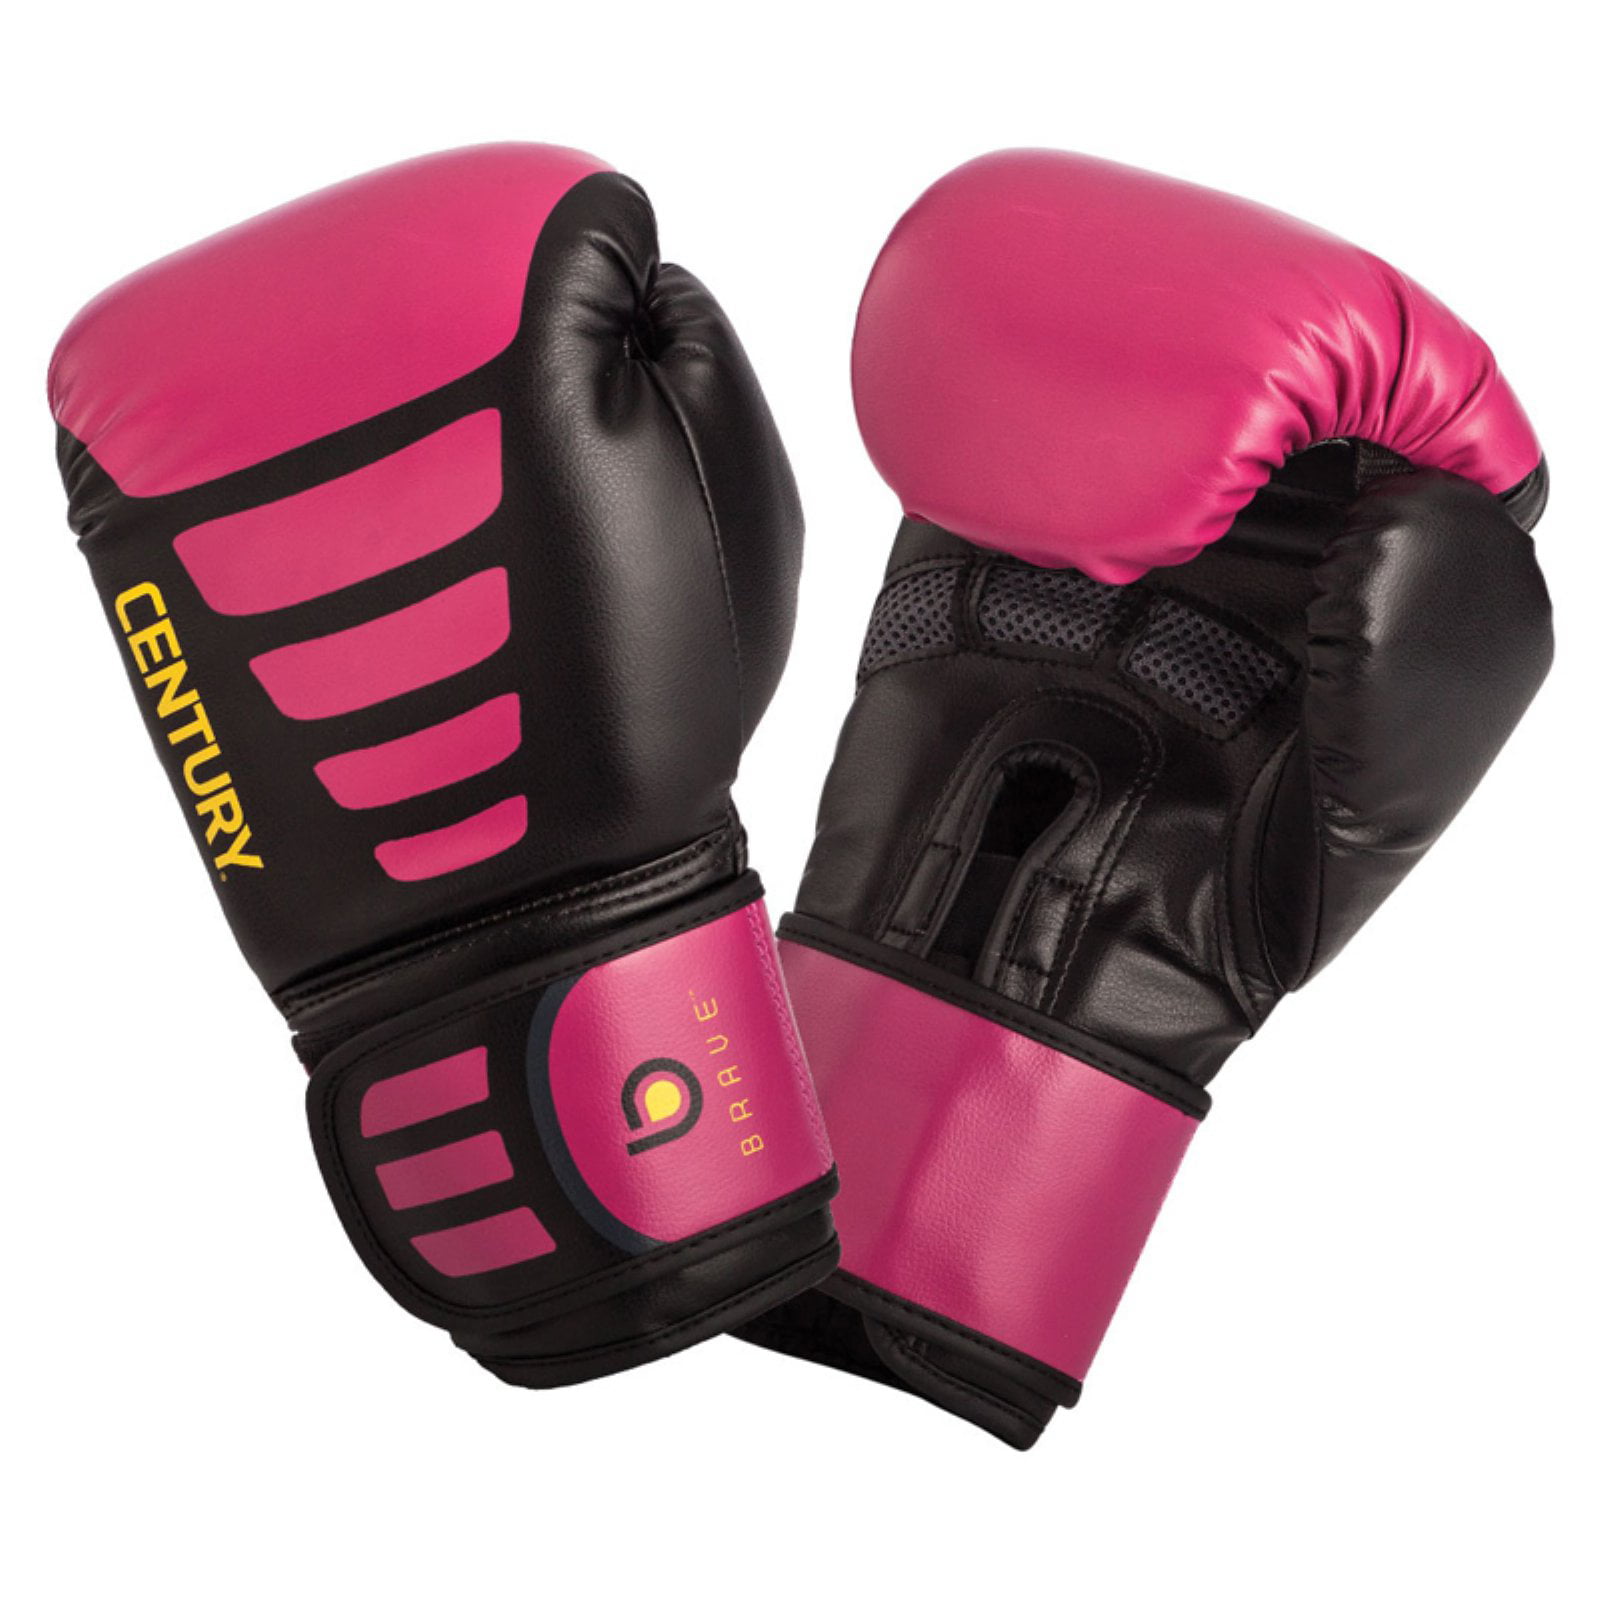 Century leather wrap bag gloves/ Pink & Black MMA Small Medium/Large 